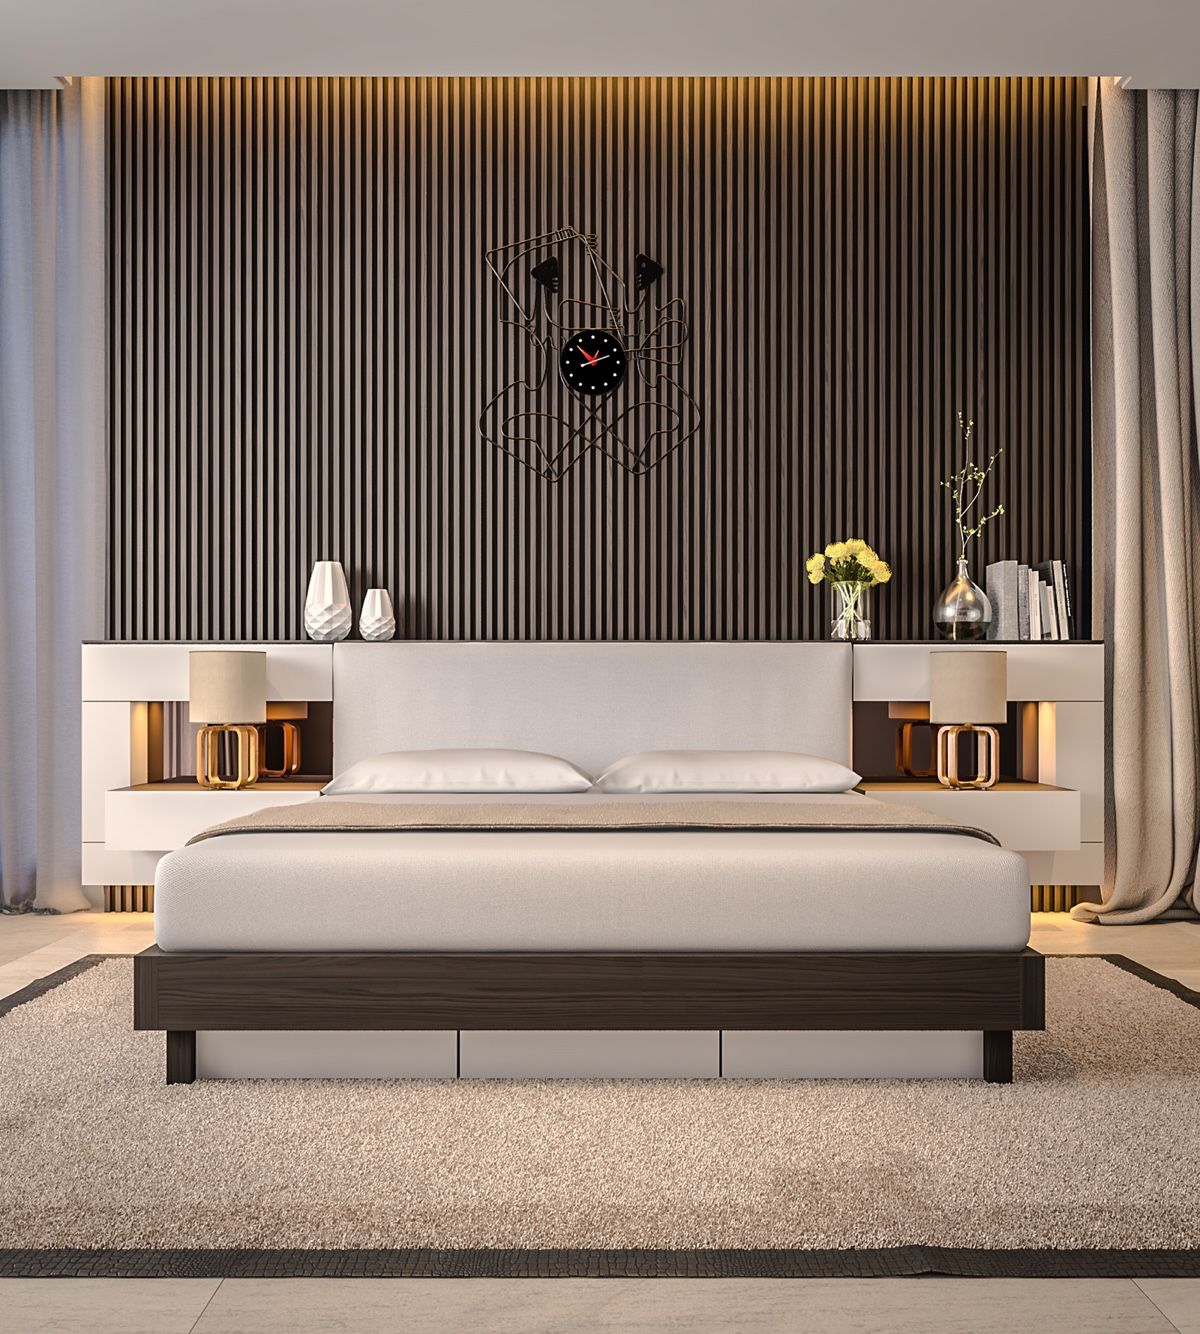 fashionable gray bedroom decor "width =" 1200 "height =" 1334 "srcset =" https://mileray.com/wp-content/uploads/2017/04/bedroom-accent-wall-grey-slats-artistic-clock- Adi -R-Indra-G.jpg 1200w, https://mileray.com/wp-content/uploads/2017/04/bedroom-accent-wall-grey-slats-artistic-clock-Adi-R-Indra-G - 270x300.jpg 270w, https://mileray.com/wp-content/uploads/2017/04/bedroom-accent-wall-grey-slats-artistic-clock-Adi-R-Indra-G-768x854.jpg 768w, https://mileray.com/wp-content/uploads/2017/04/bedroom-accent-wall-grey-slats-artistic-clock-Adi-R-Indra-G-921x1024.jpg 921w, https: // myfashionos .com / wp-content / uploads / 2017/04 / bedroom-accent-wall-gray-slats-artistic-clock-Adi-R-Indra-G-696x774.jpg 696w, https://mileray.com/wp - content / uploads / 2017/04 / bedroom-accent-wall-gray-slats-artistic-clock-Adi-R-Indra-G-1068x1187.jpg 1068w, https://mileray.com/wp-content/uploads/ 2017 / 04 / bedroom-accent-wall-gray-slats-artistic-clock-Adi-R-Indra-G-378x420.jpg 378w "sizes =" (maximum width: 1200px) 100vw, 1200px